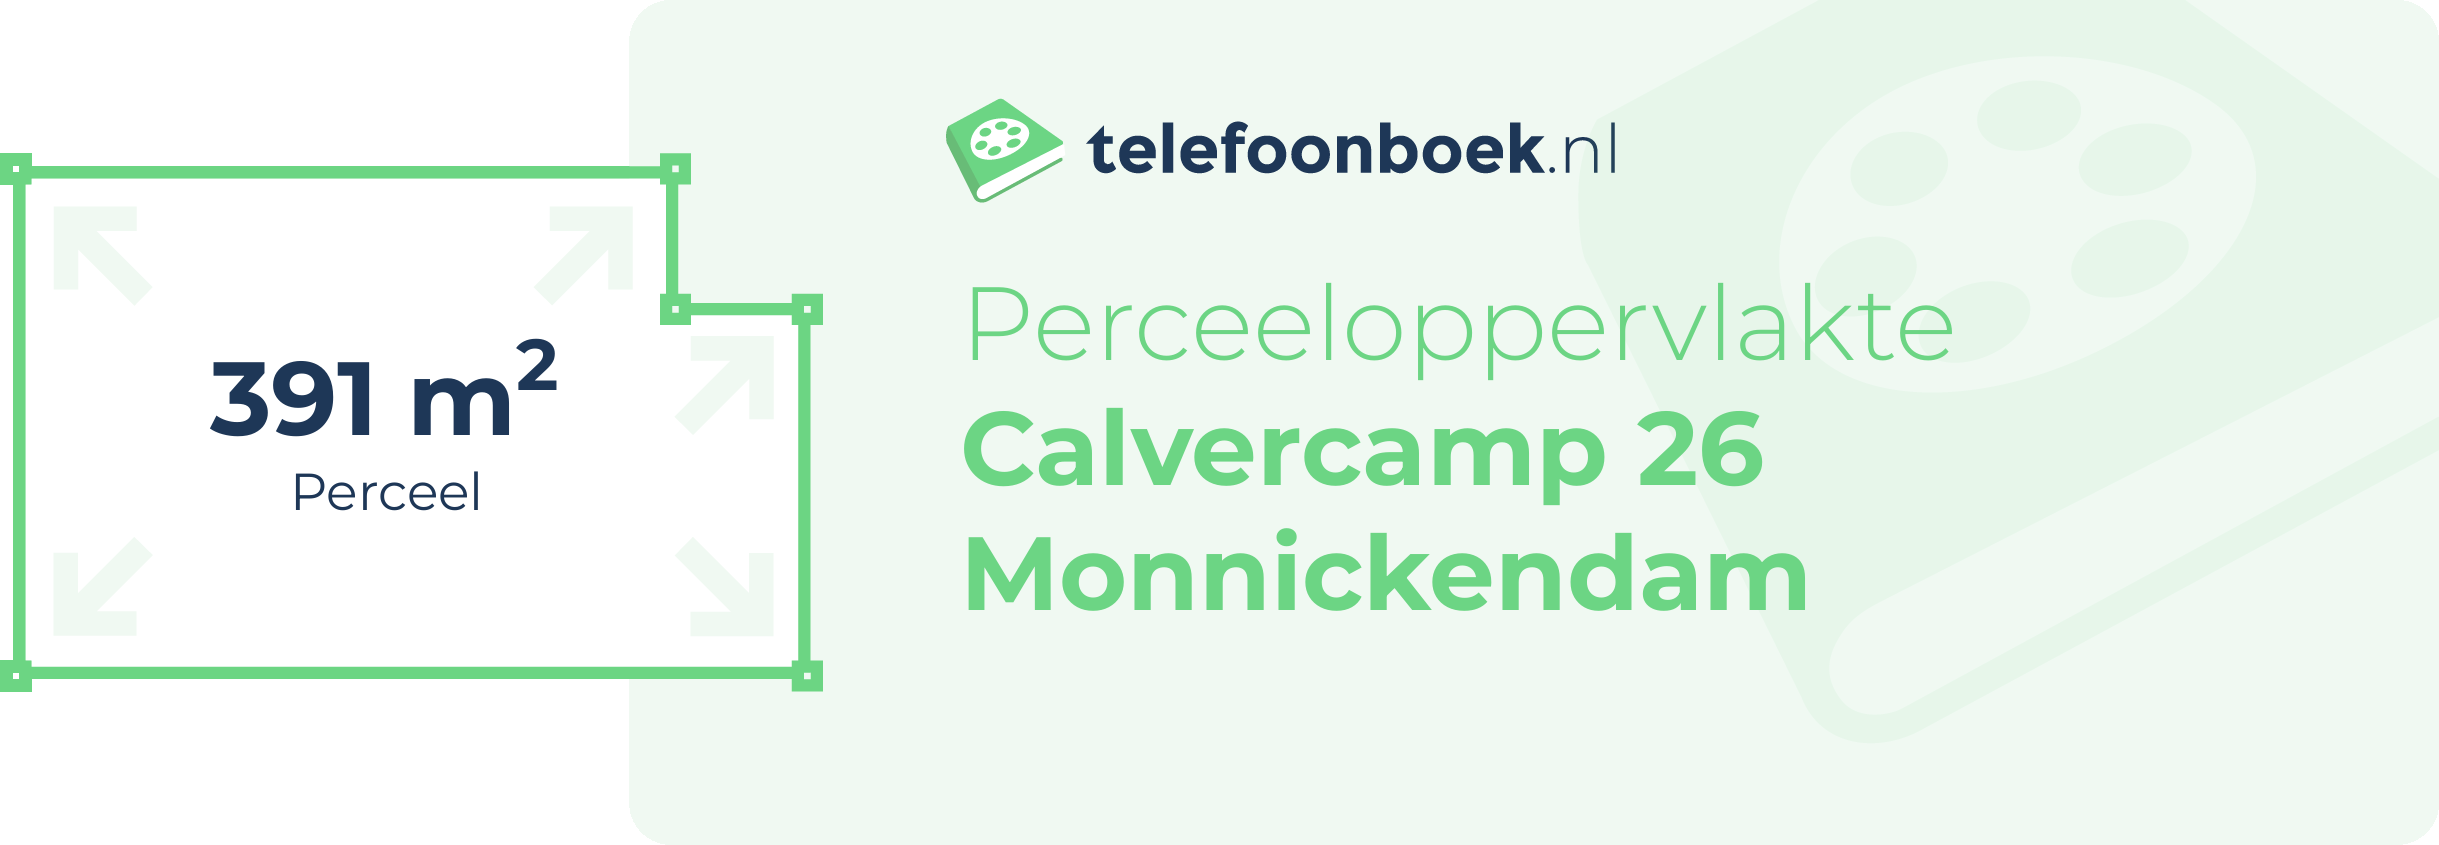 Perceeloppervlakte Calvercamp 26 Monnickendam